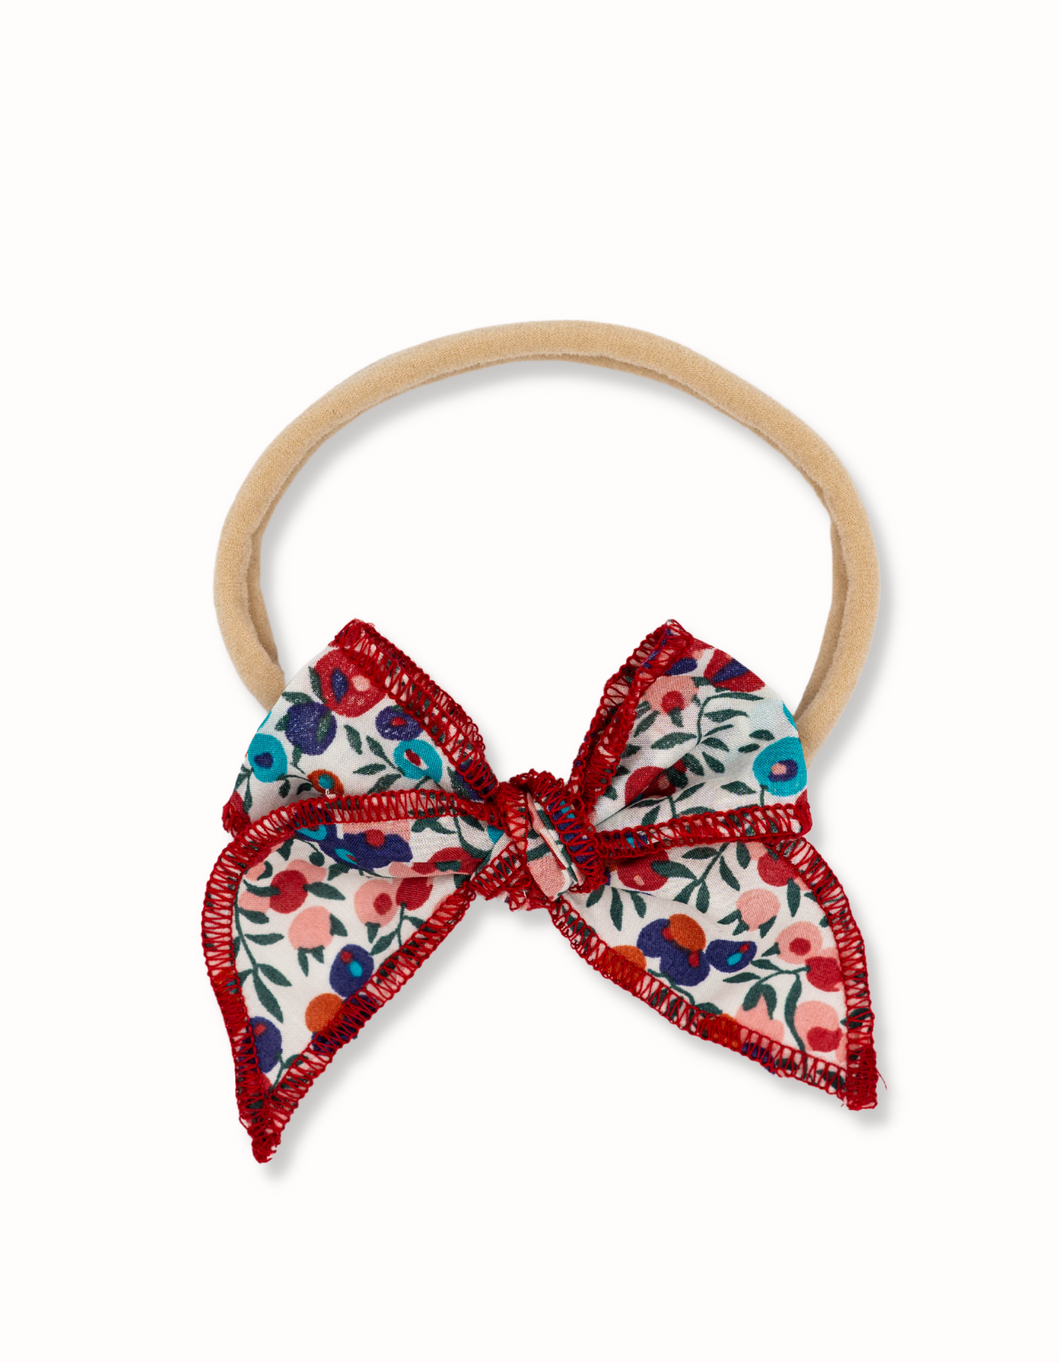 Eve Baby Bow Headband in Liberty of London Fabric